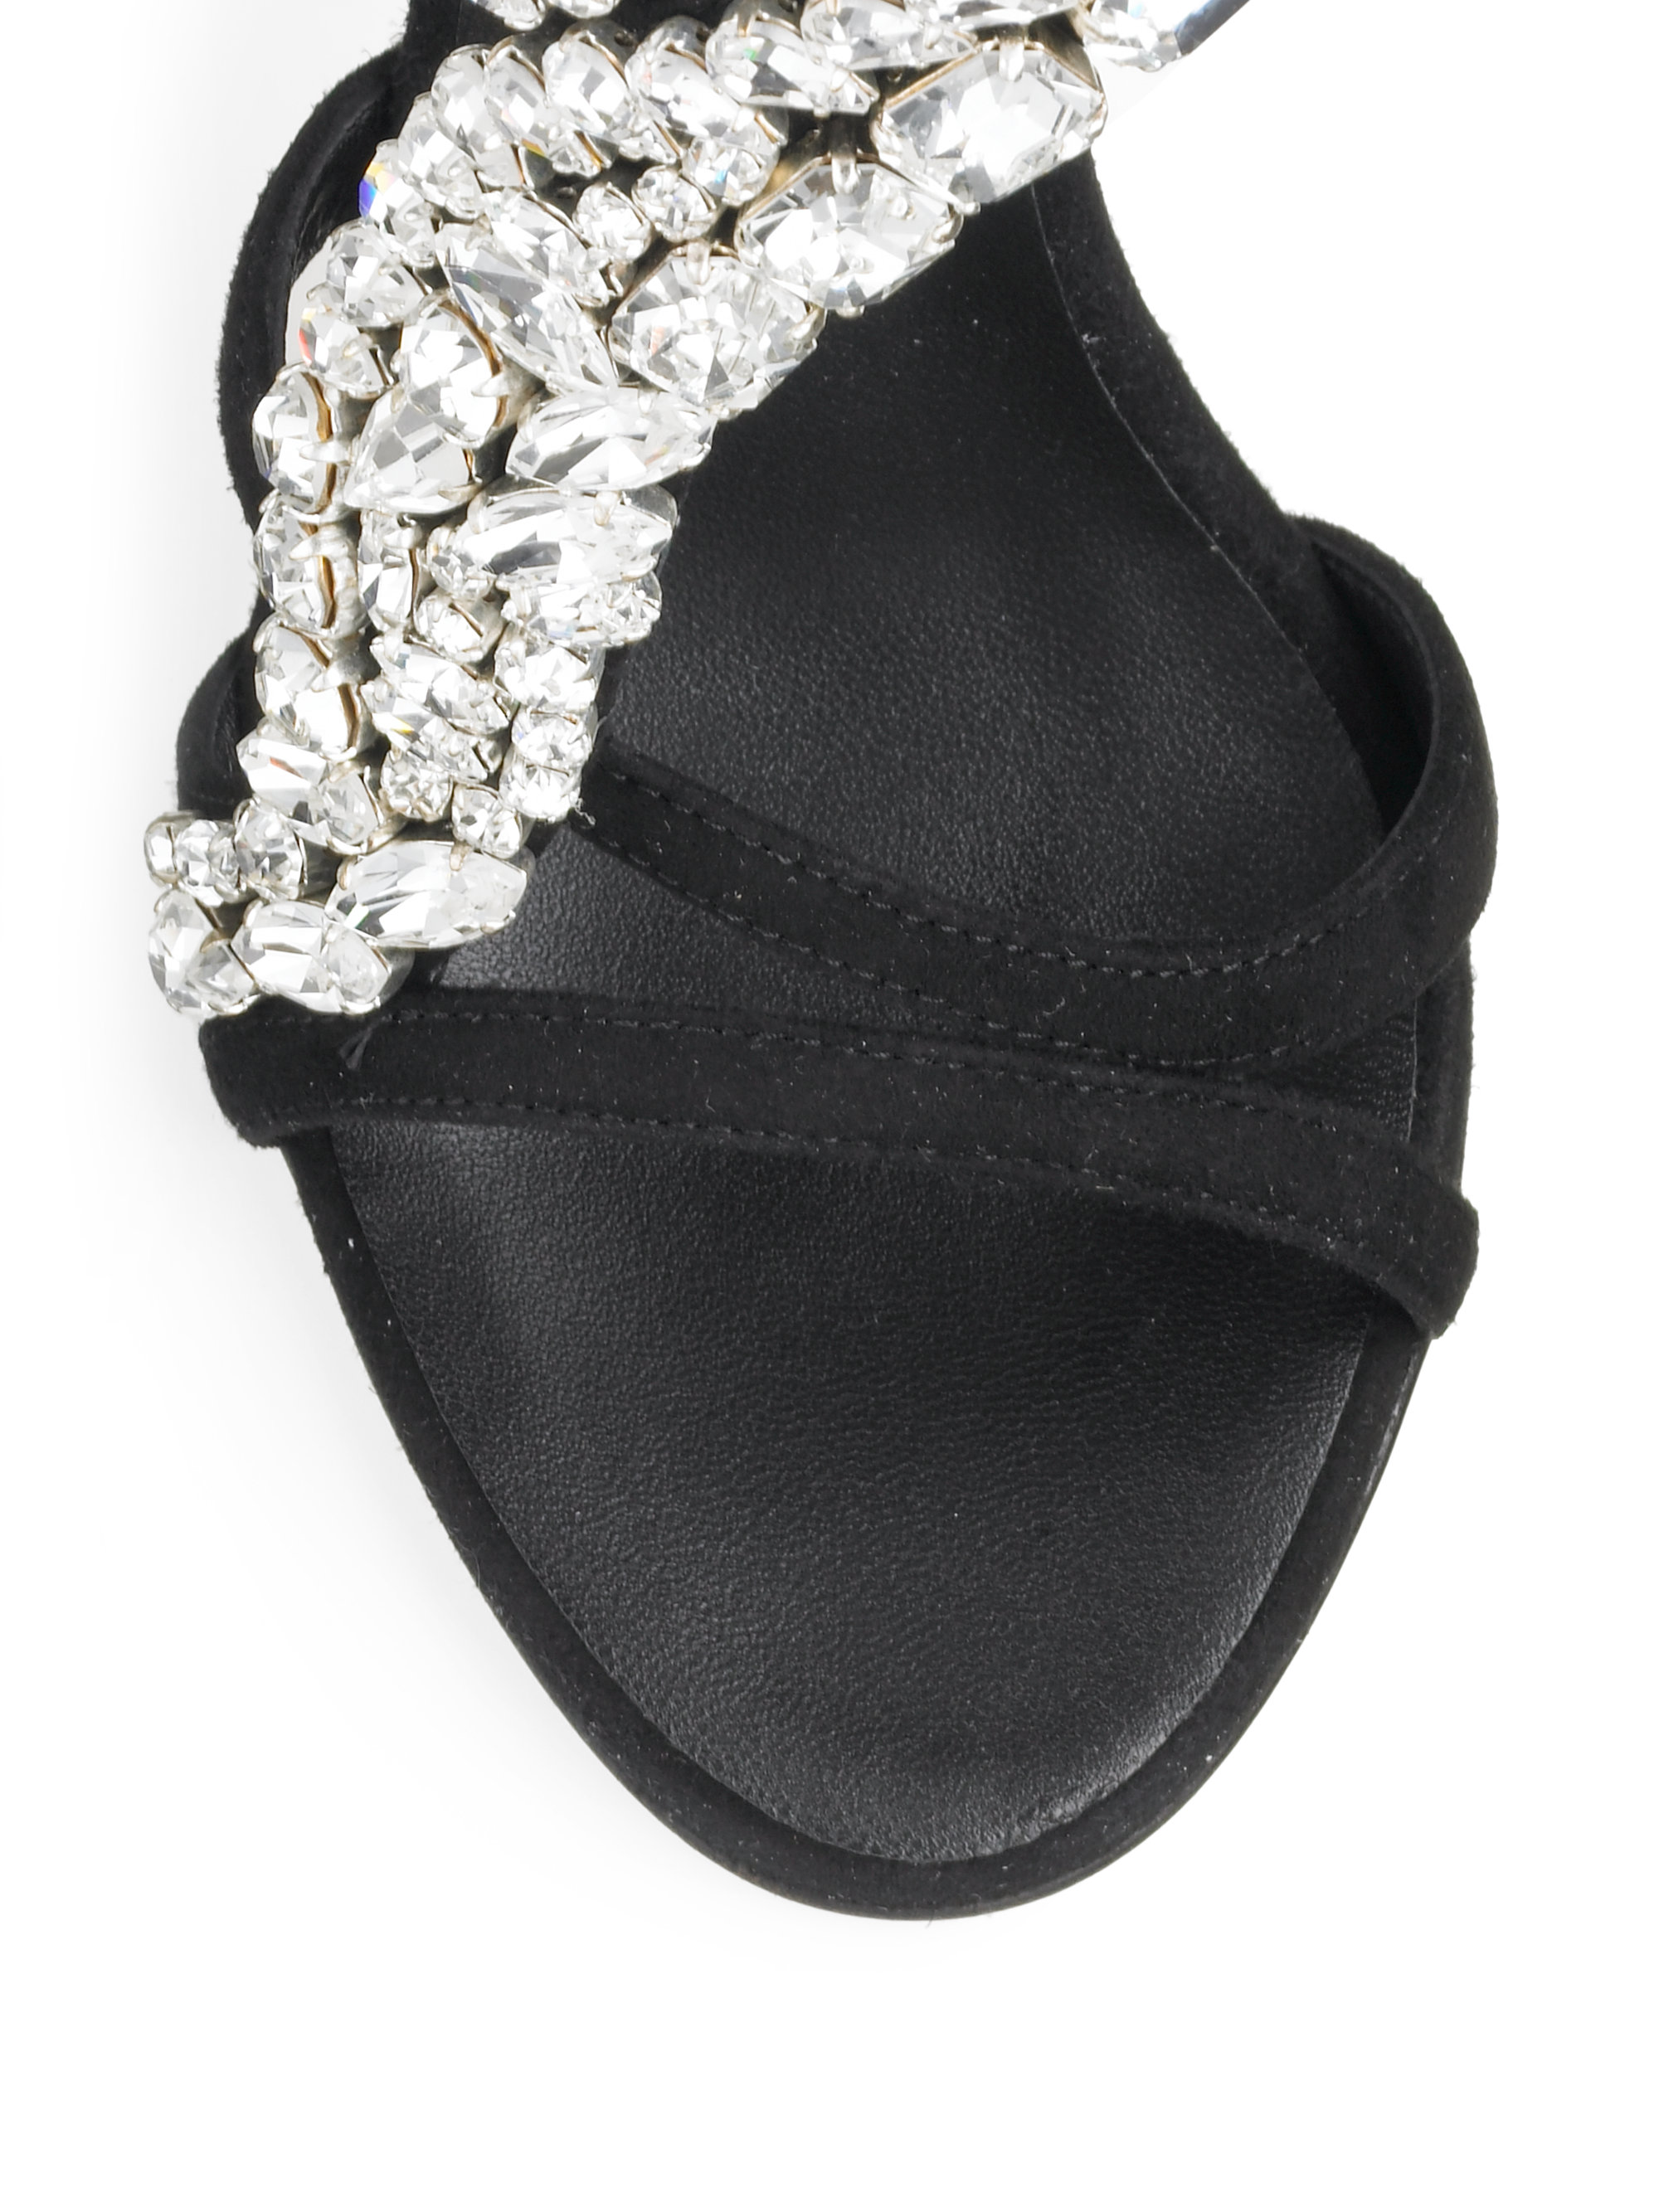 Lyst - Giuseppe zanotti Jeweled Suede High Heel Sandals in Black